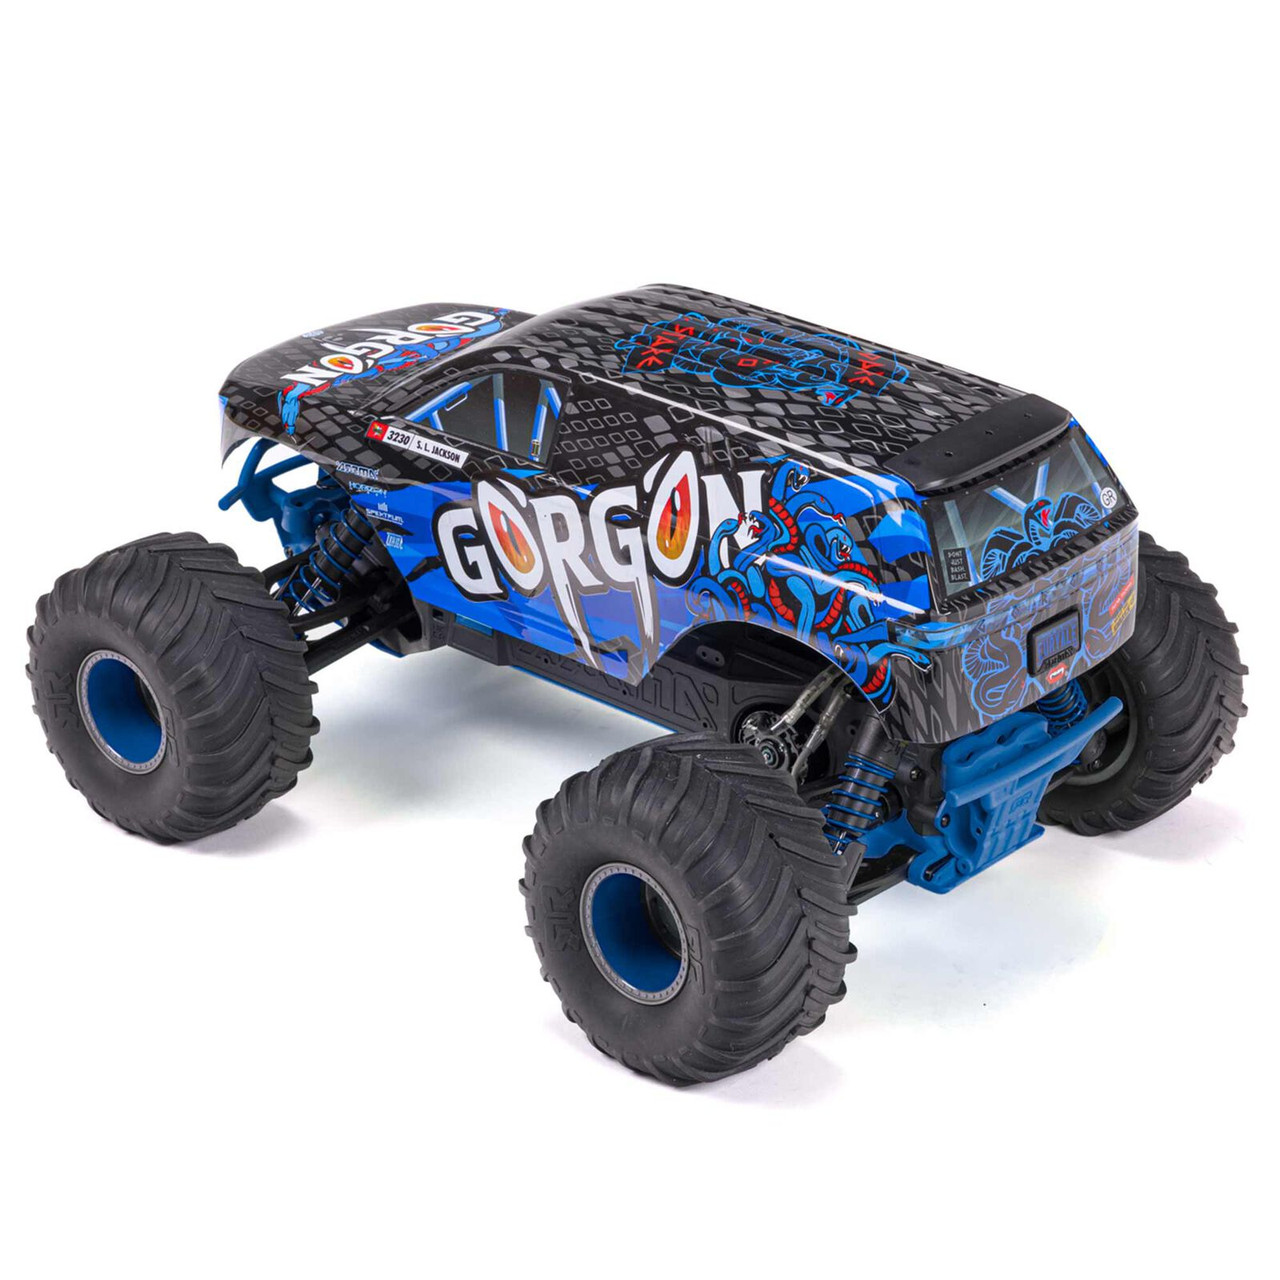 Arrma 1/10 GORGON 4X2 MEGA 550 Brushed Monster Truck RTR, Blue